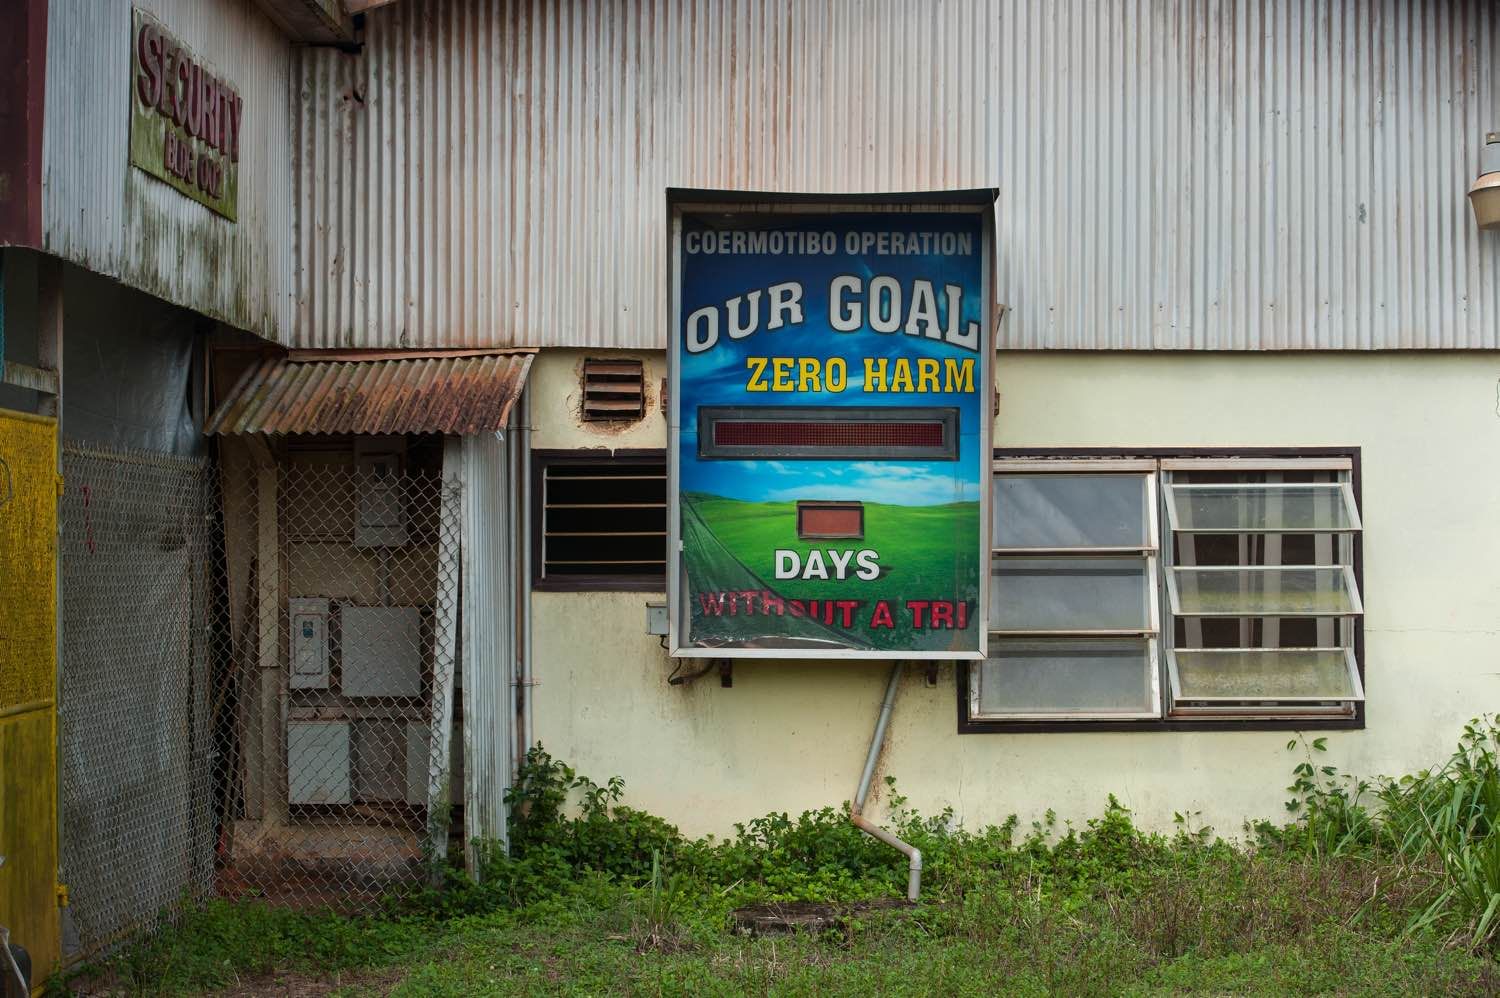 "Zero Harm" was the goal at Alcoa's closed Coermotibo Operation near Moengo. Image by Stephanie Strasburg. Suriname, 2017.
